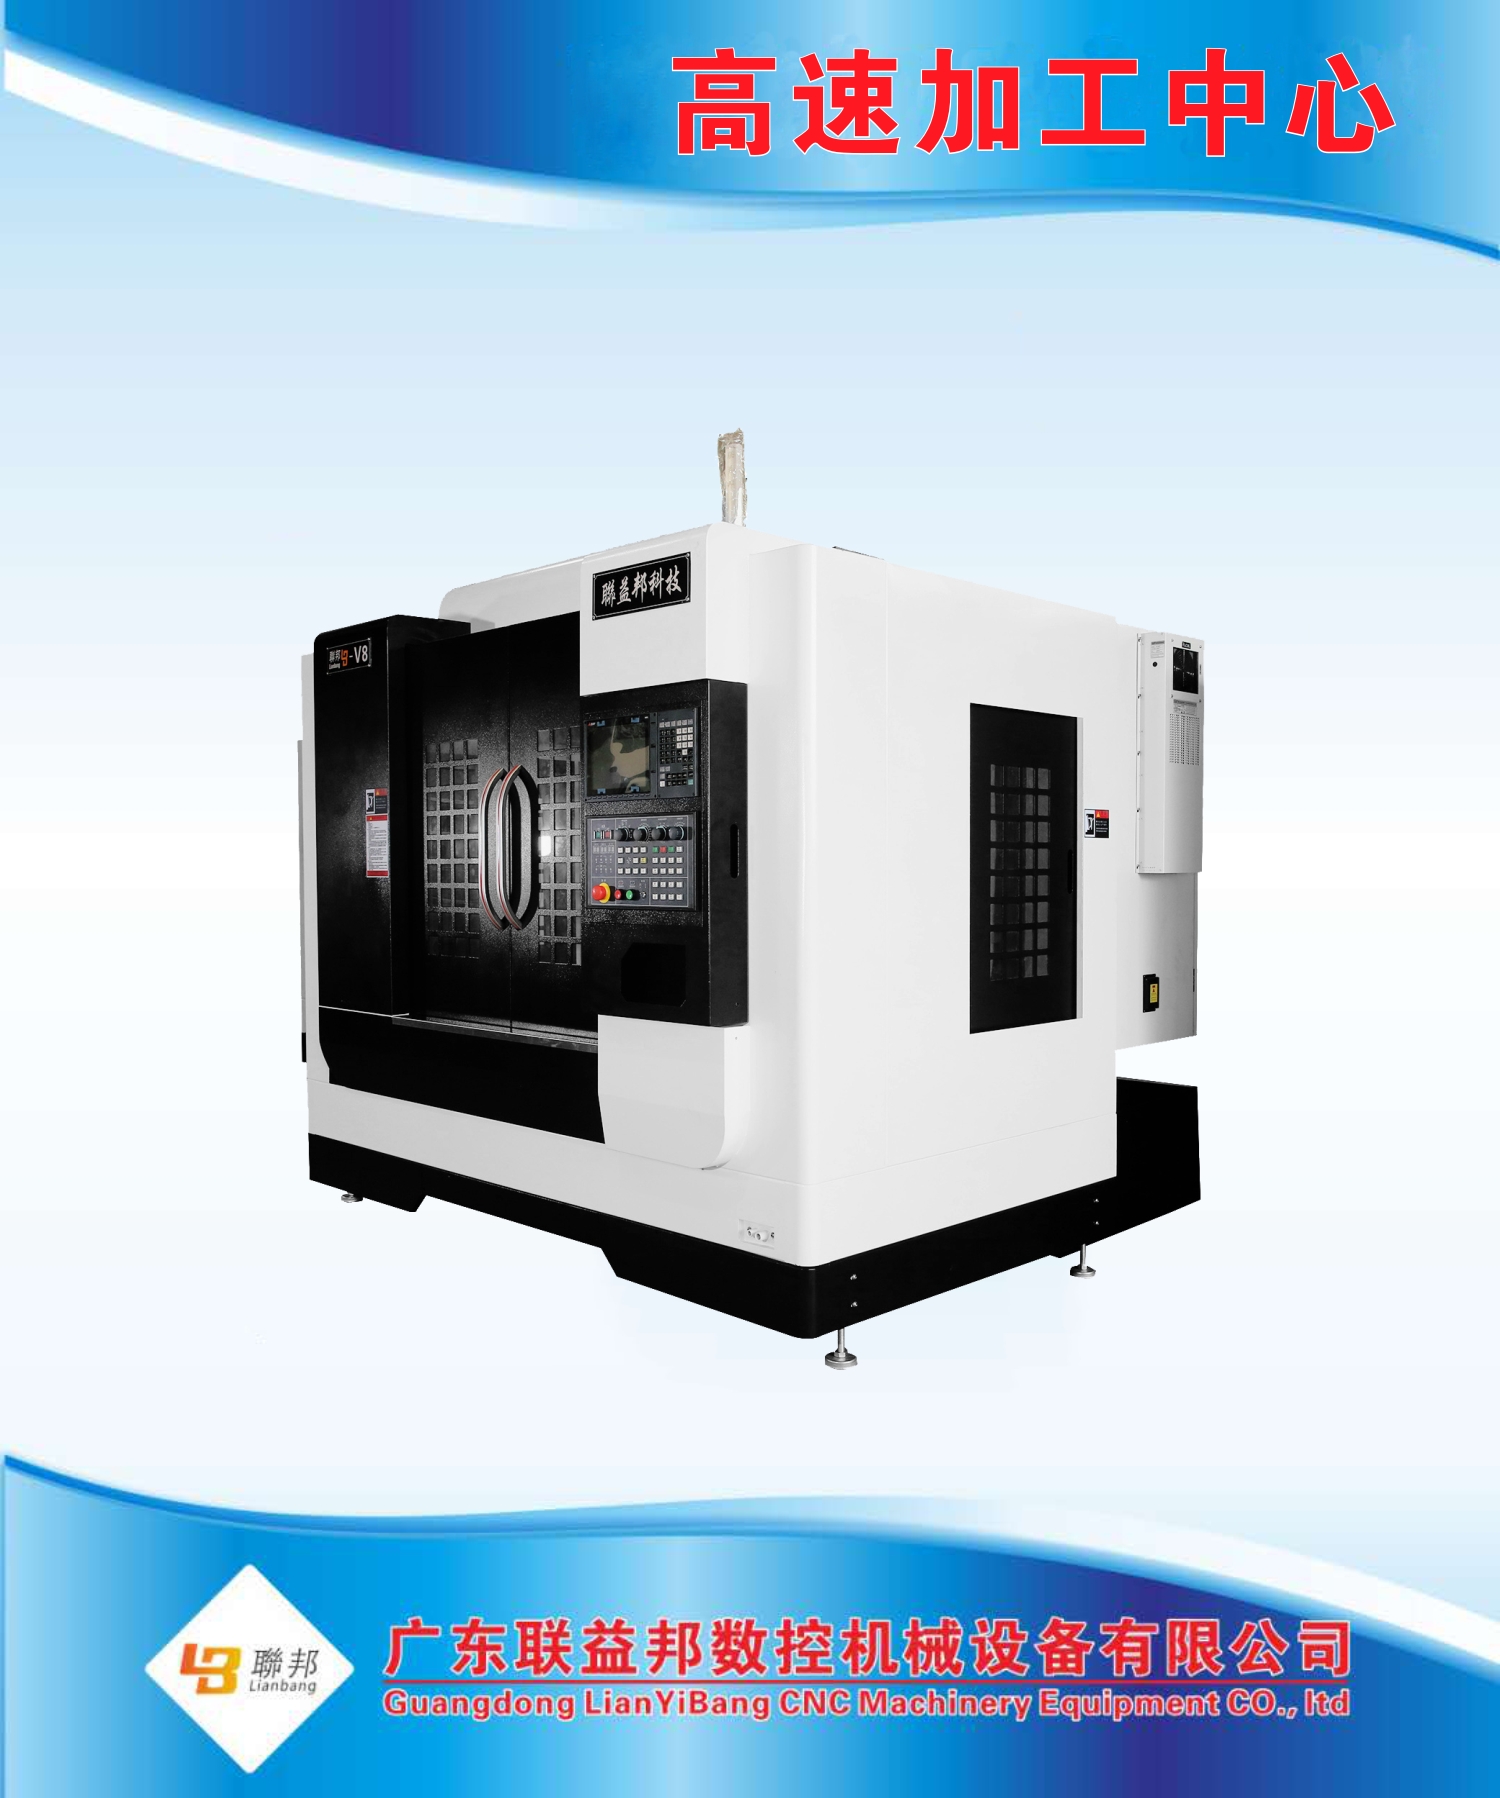  High speed machining center machine lb-850